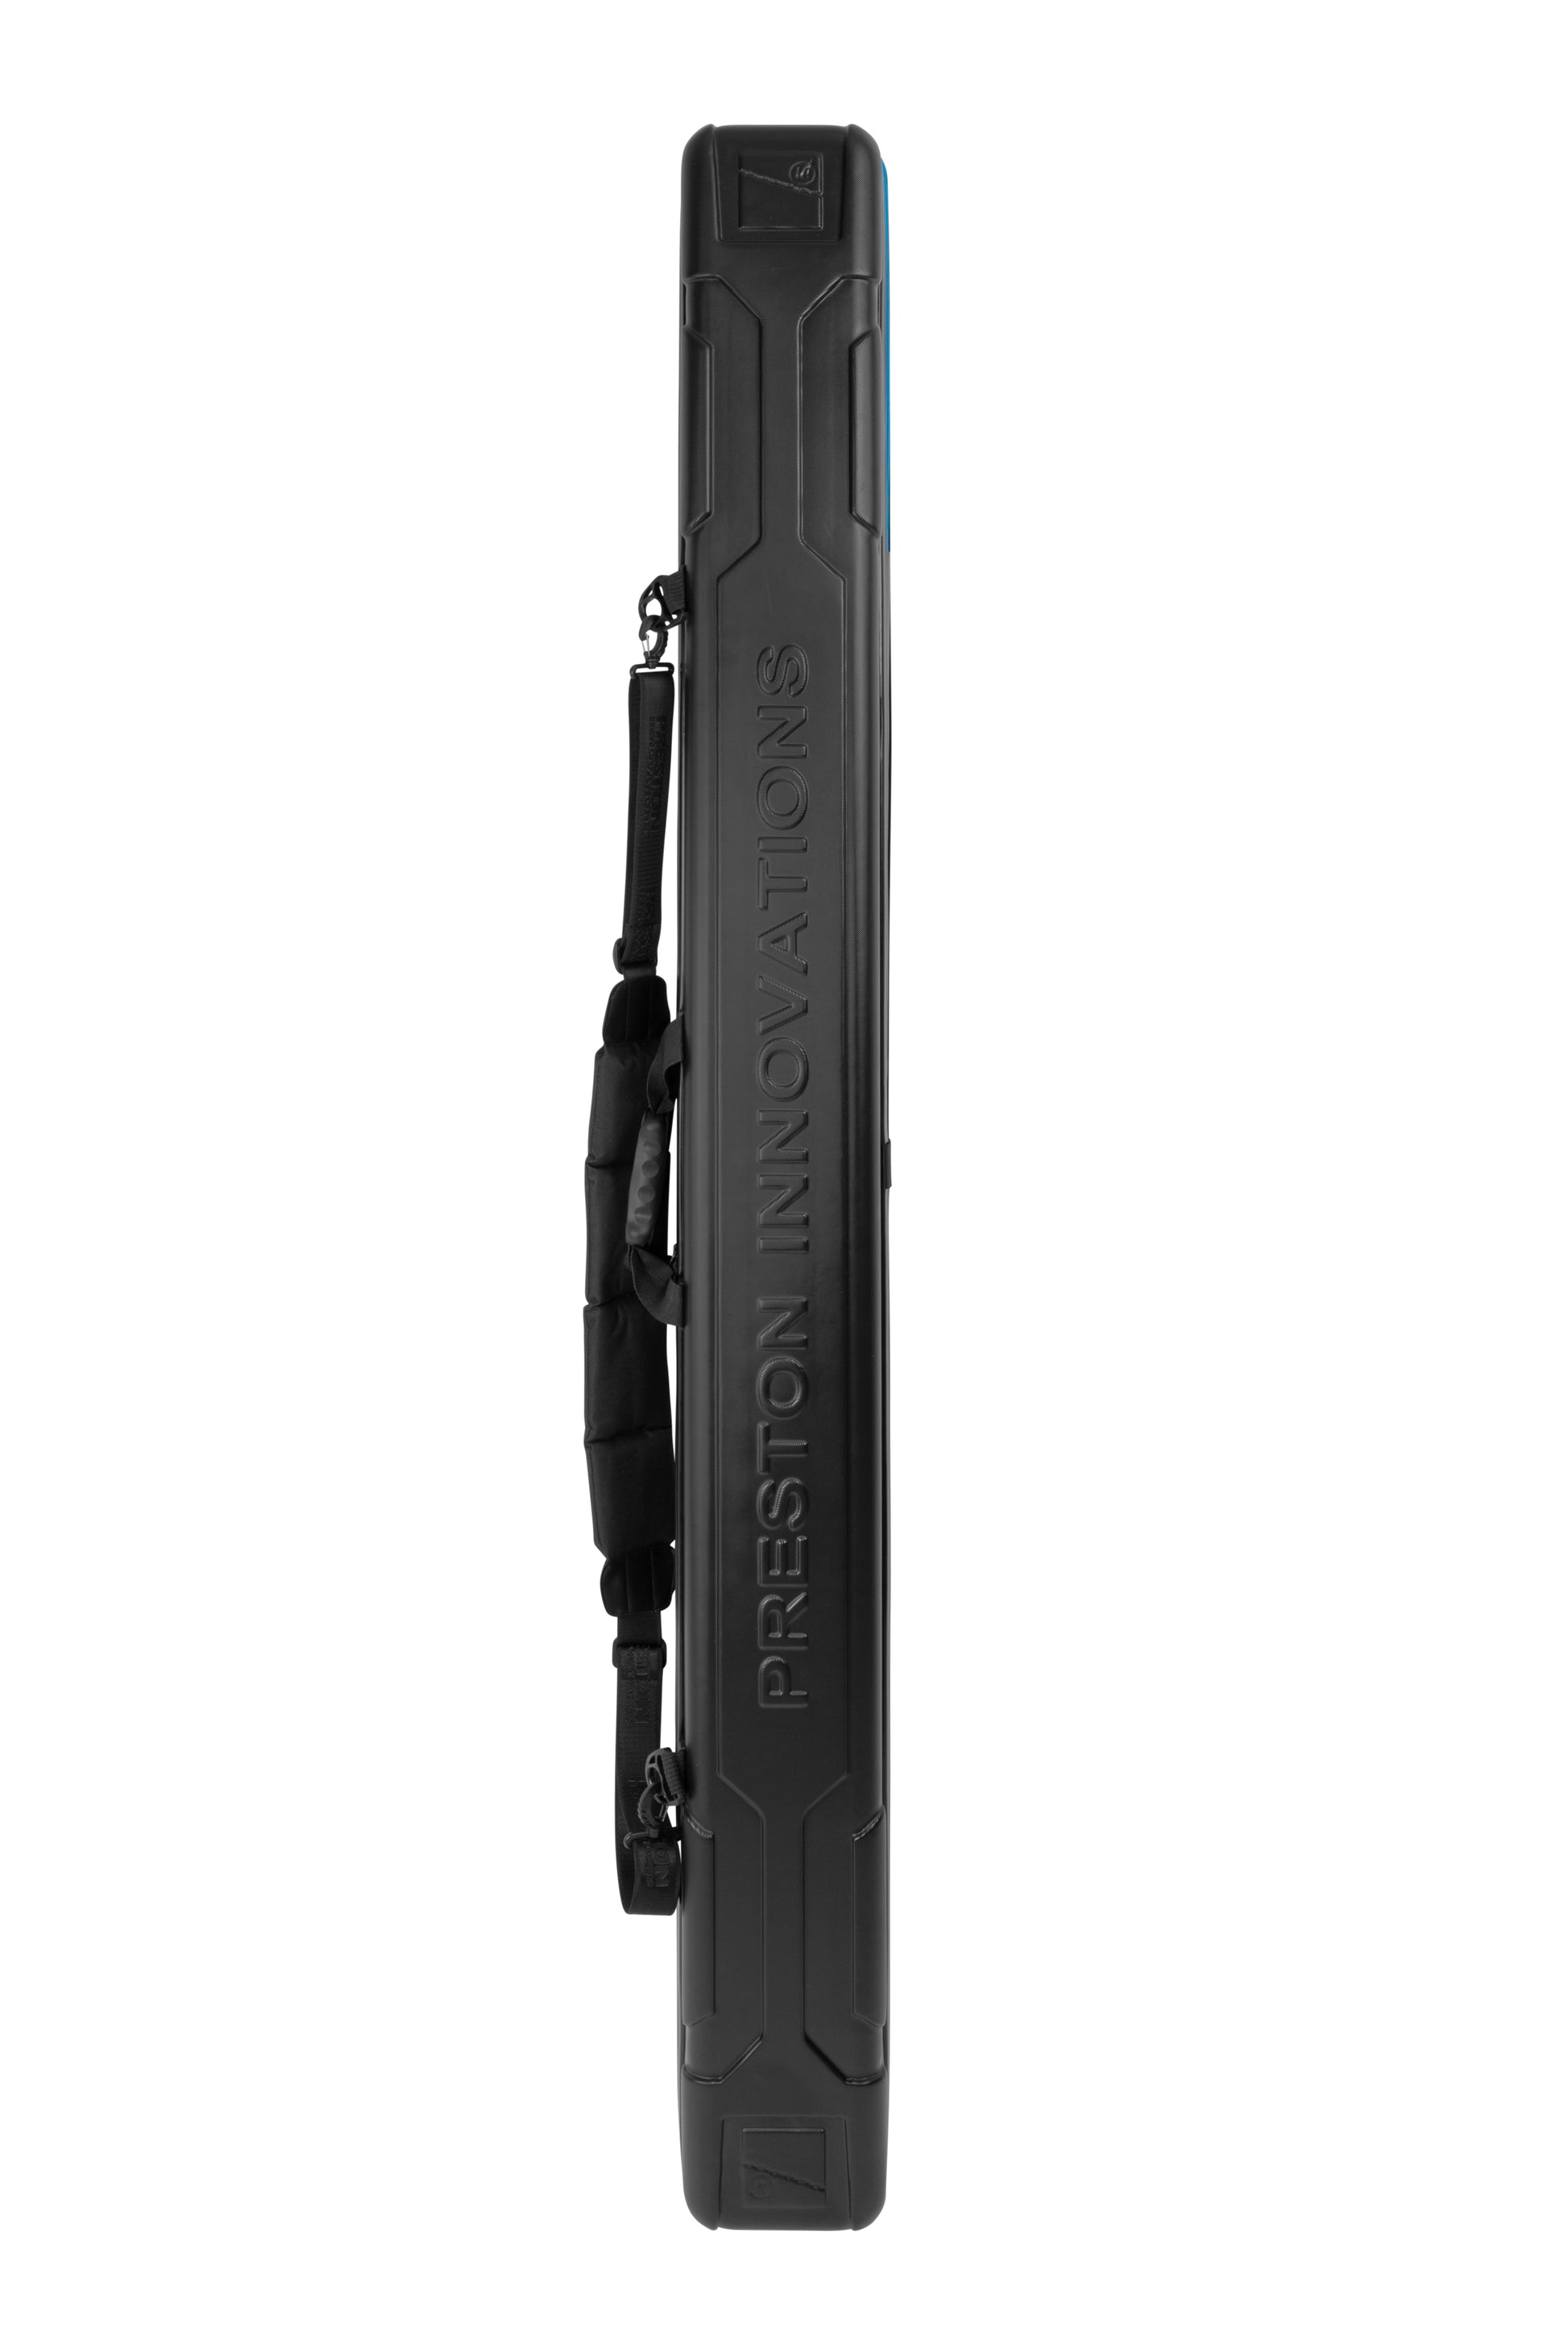 Preston Innovations Hardcase Pole Safe XL - The Tackle Store